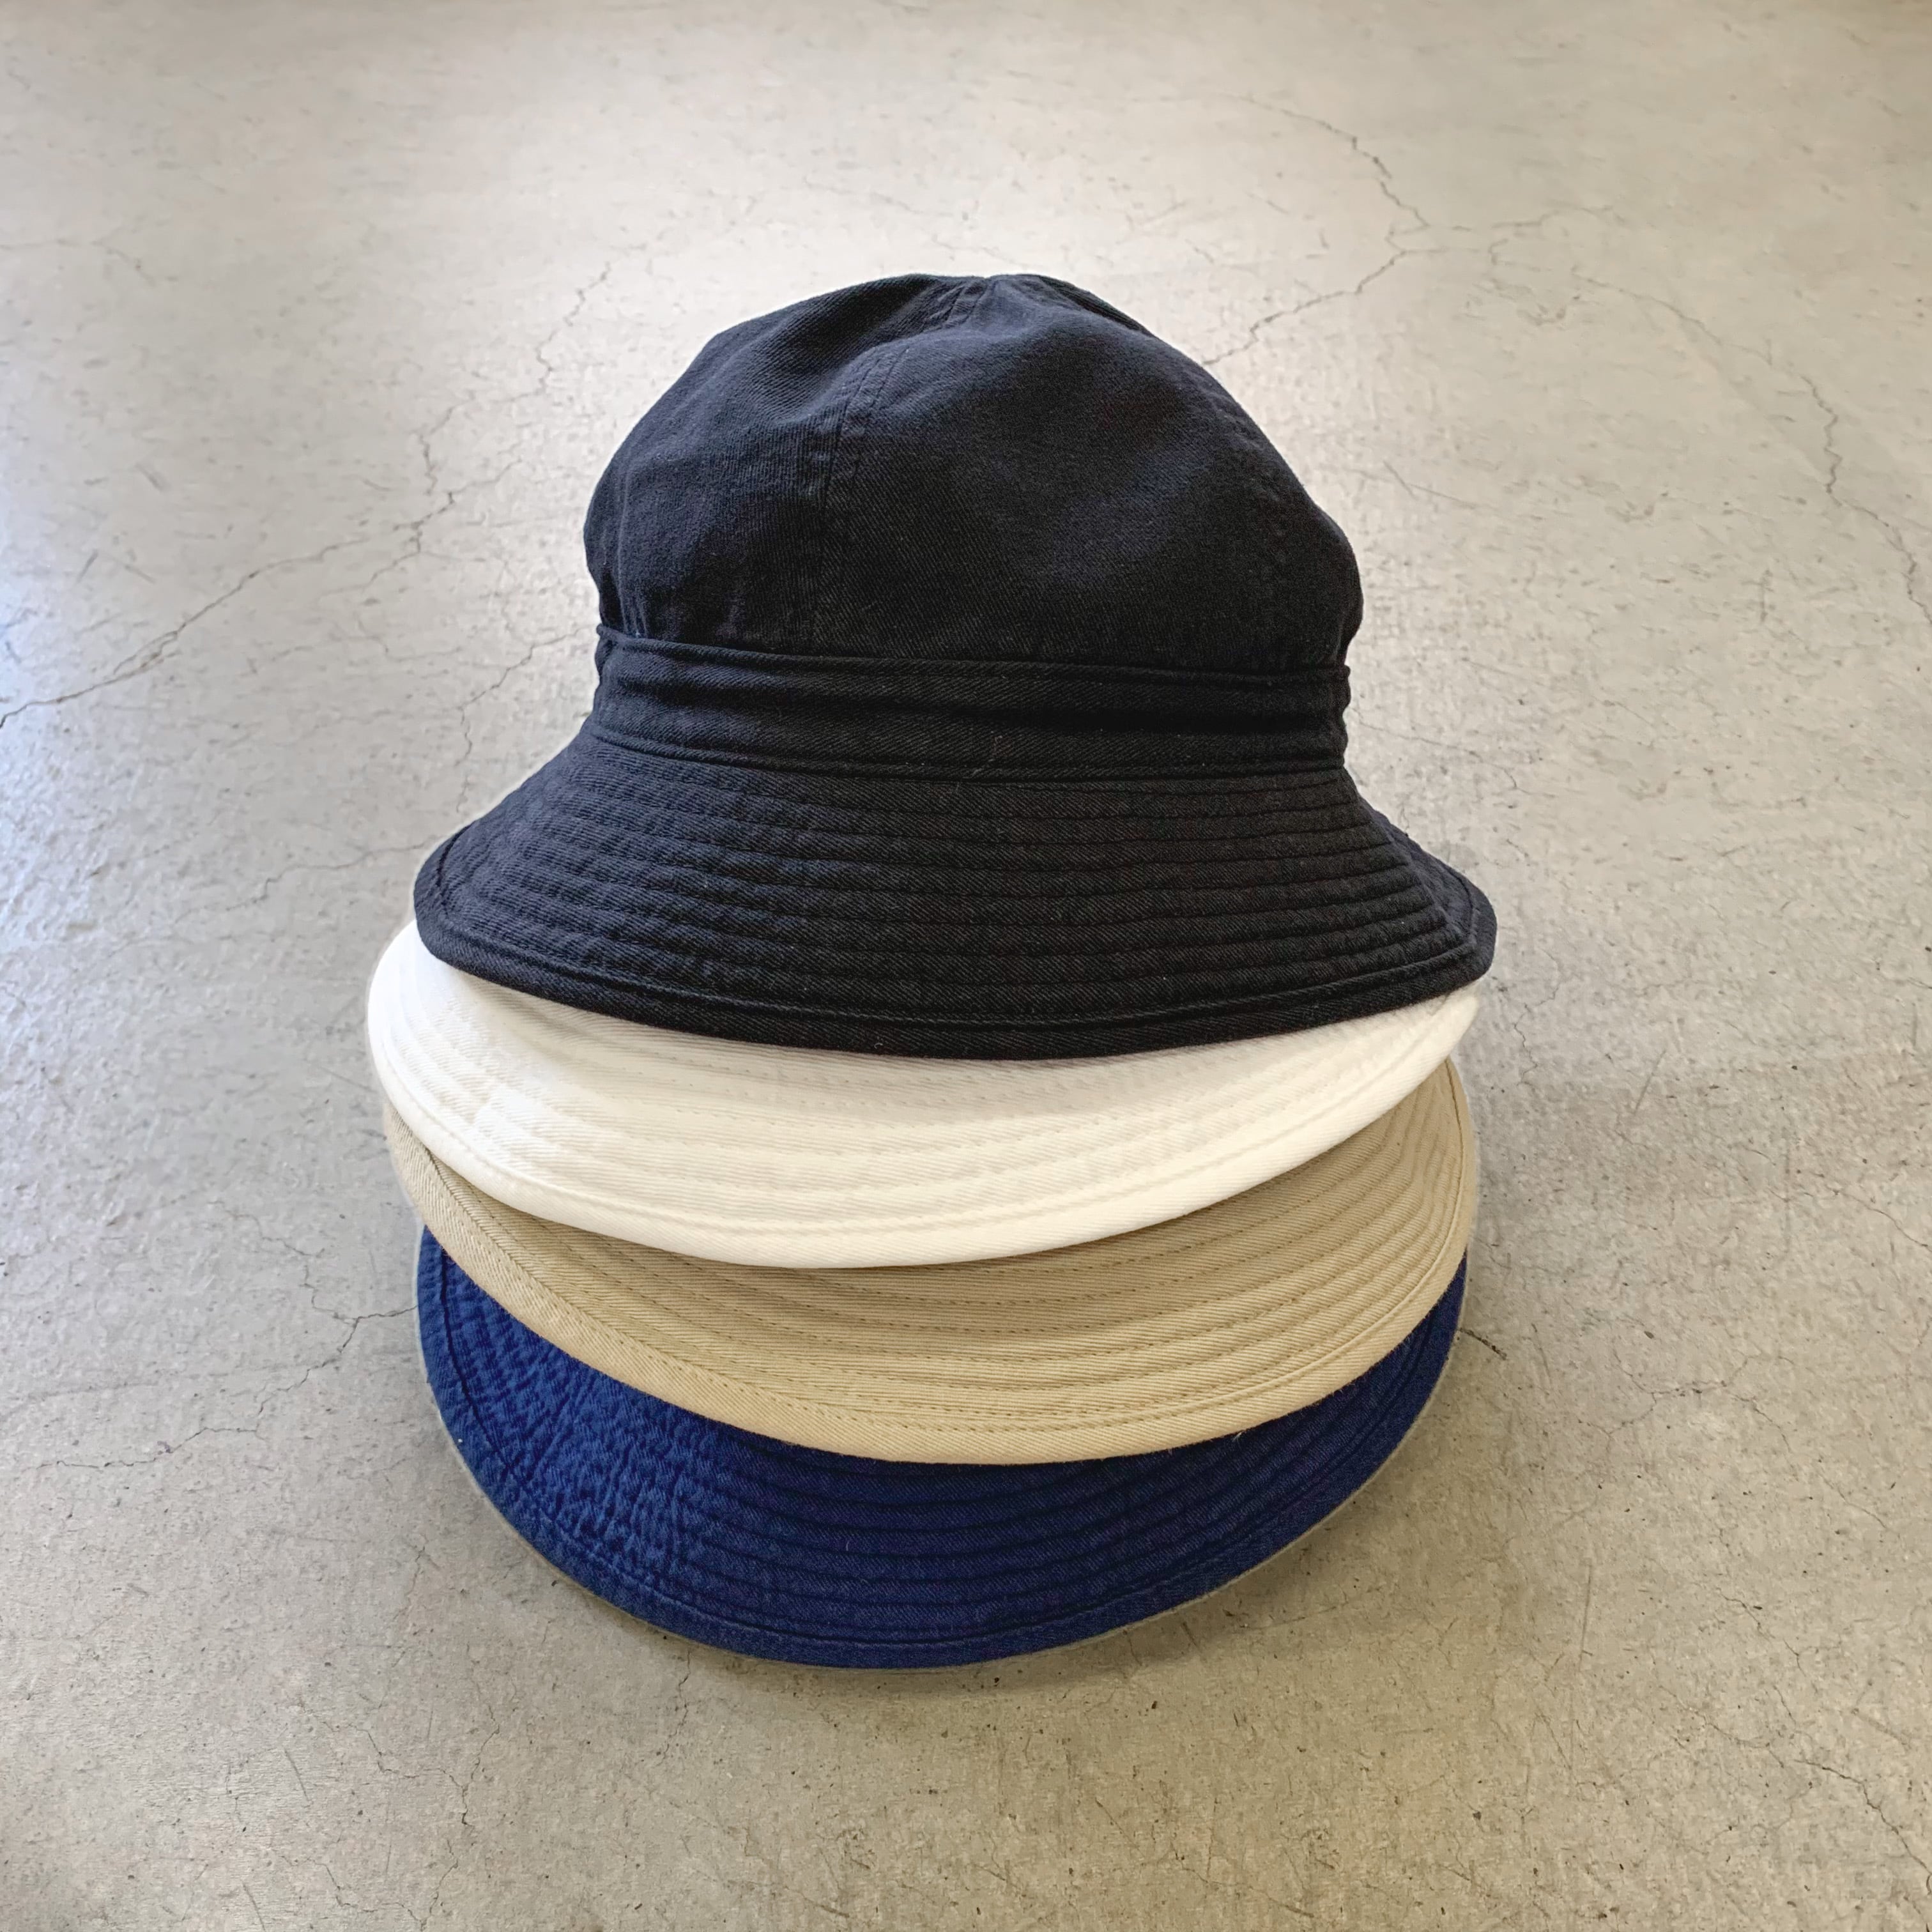 SANFRANCISCO HAT / Metro Hat | WhiteHeadEagle